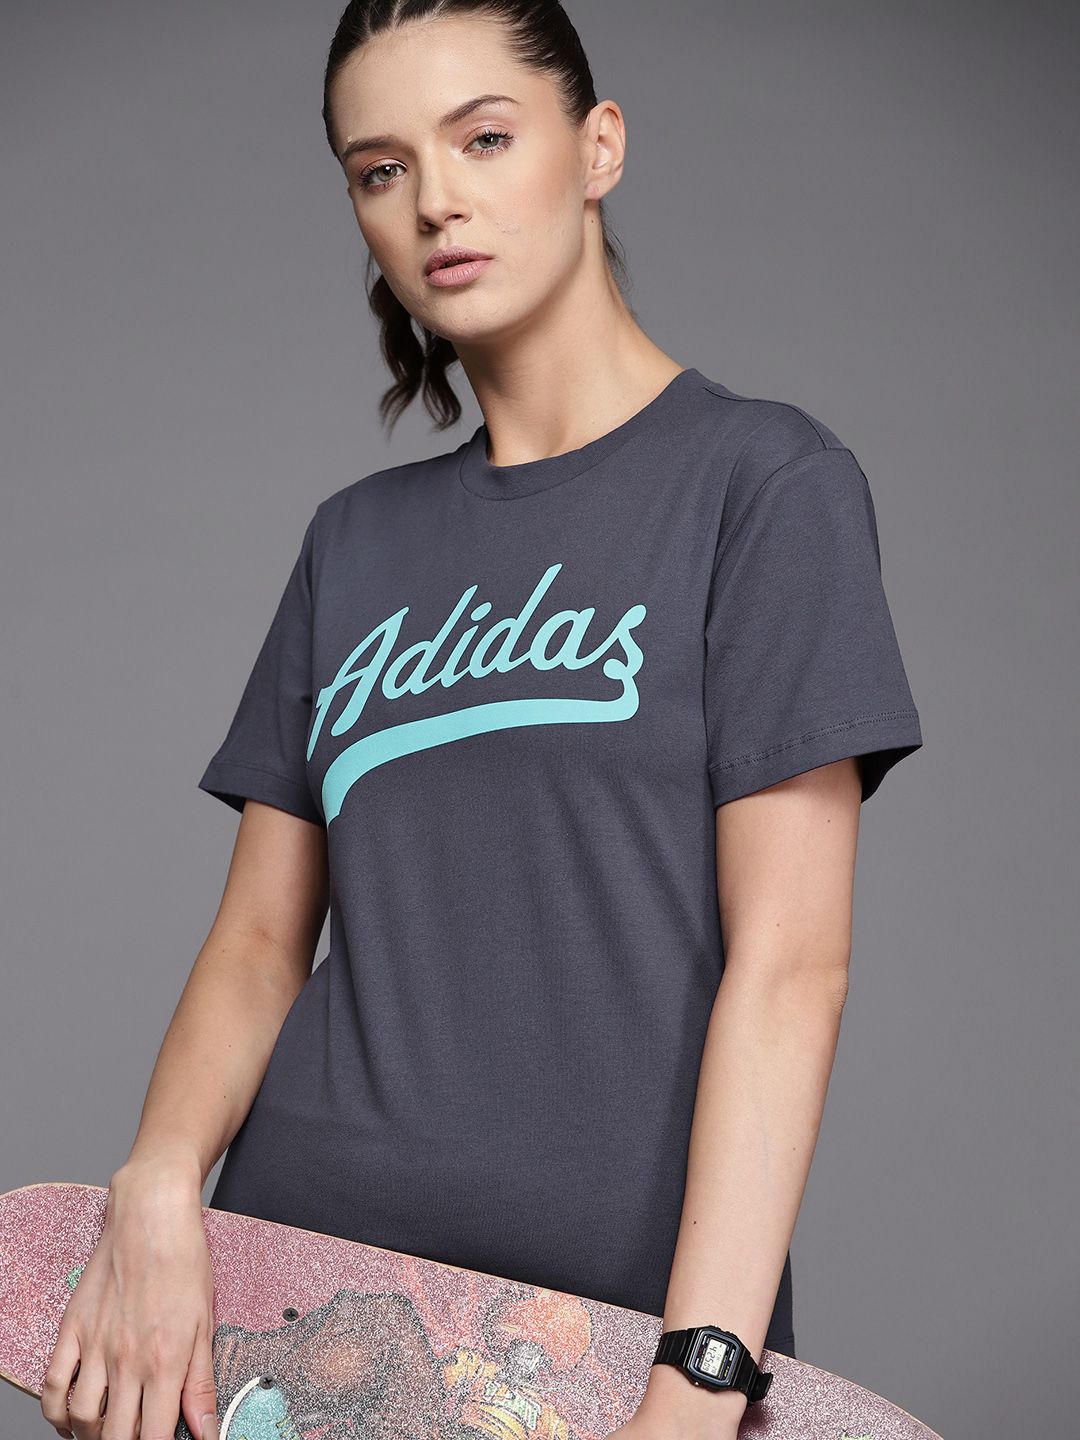 ADIDAS Originals Women Navy Blue Regular Printed Pure Cotton Modern B-Ball T-shirt Price in India